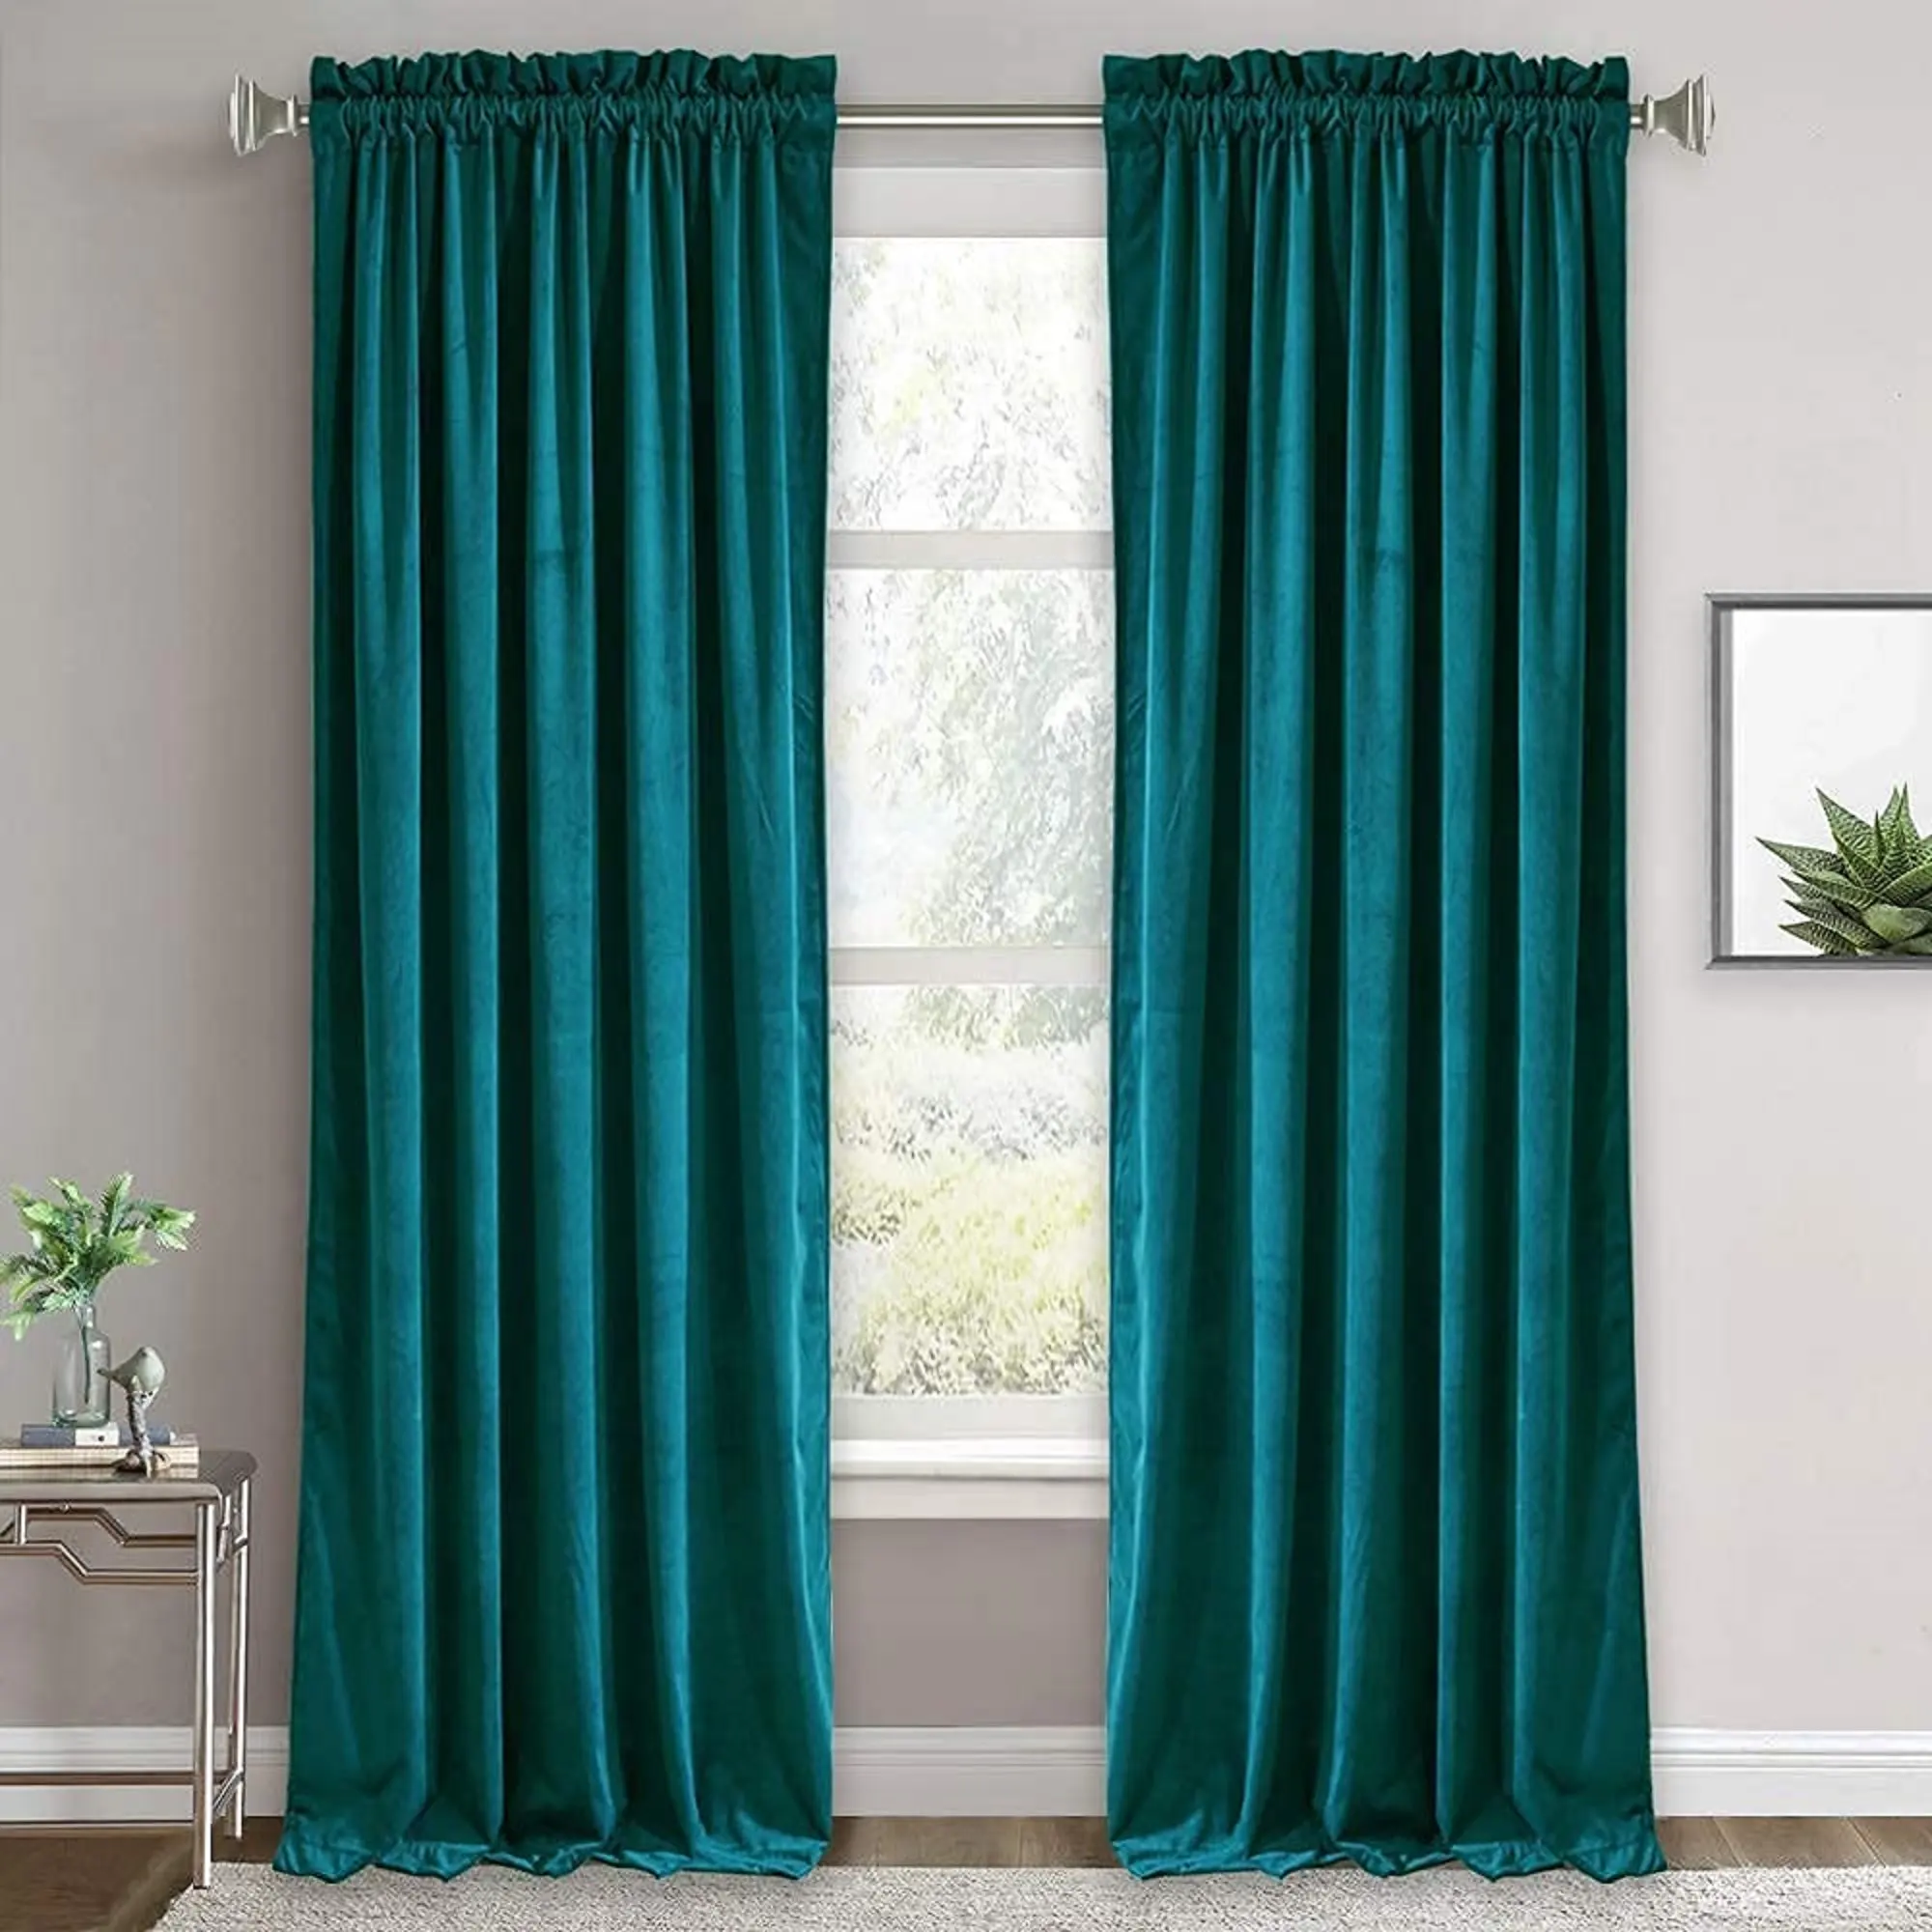 Super Soft Heavy Velvet Blackout Curtain Drapes Panel Rod Pocket Dark Emerald Green Window Curtains for Living Room